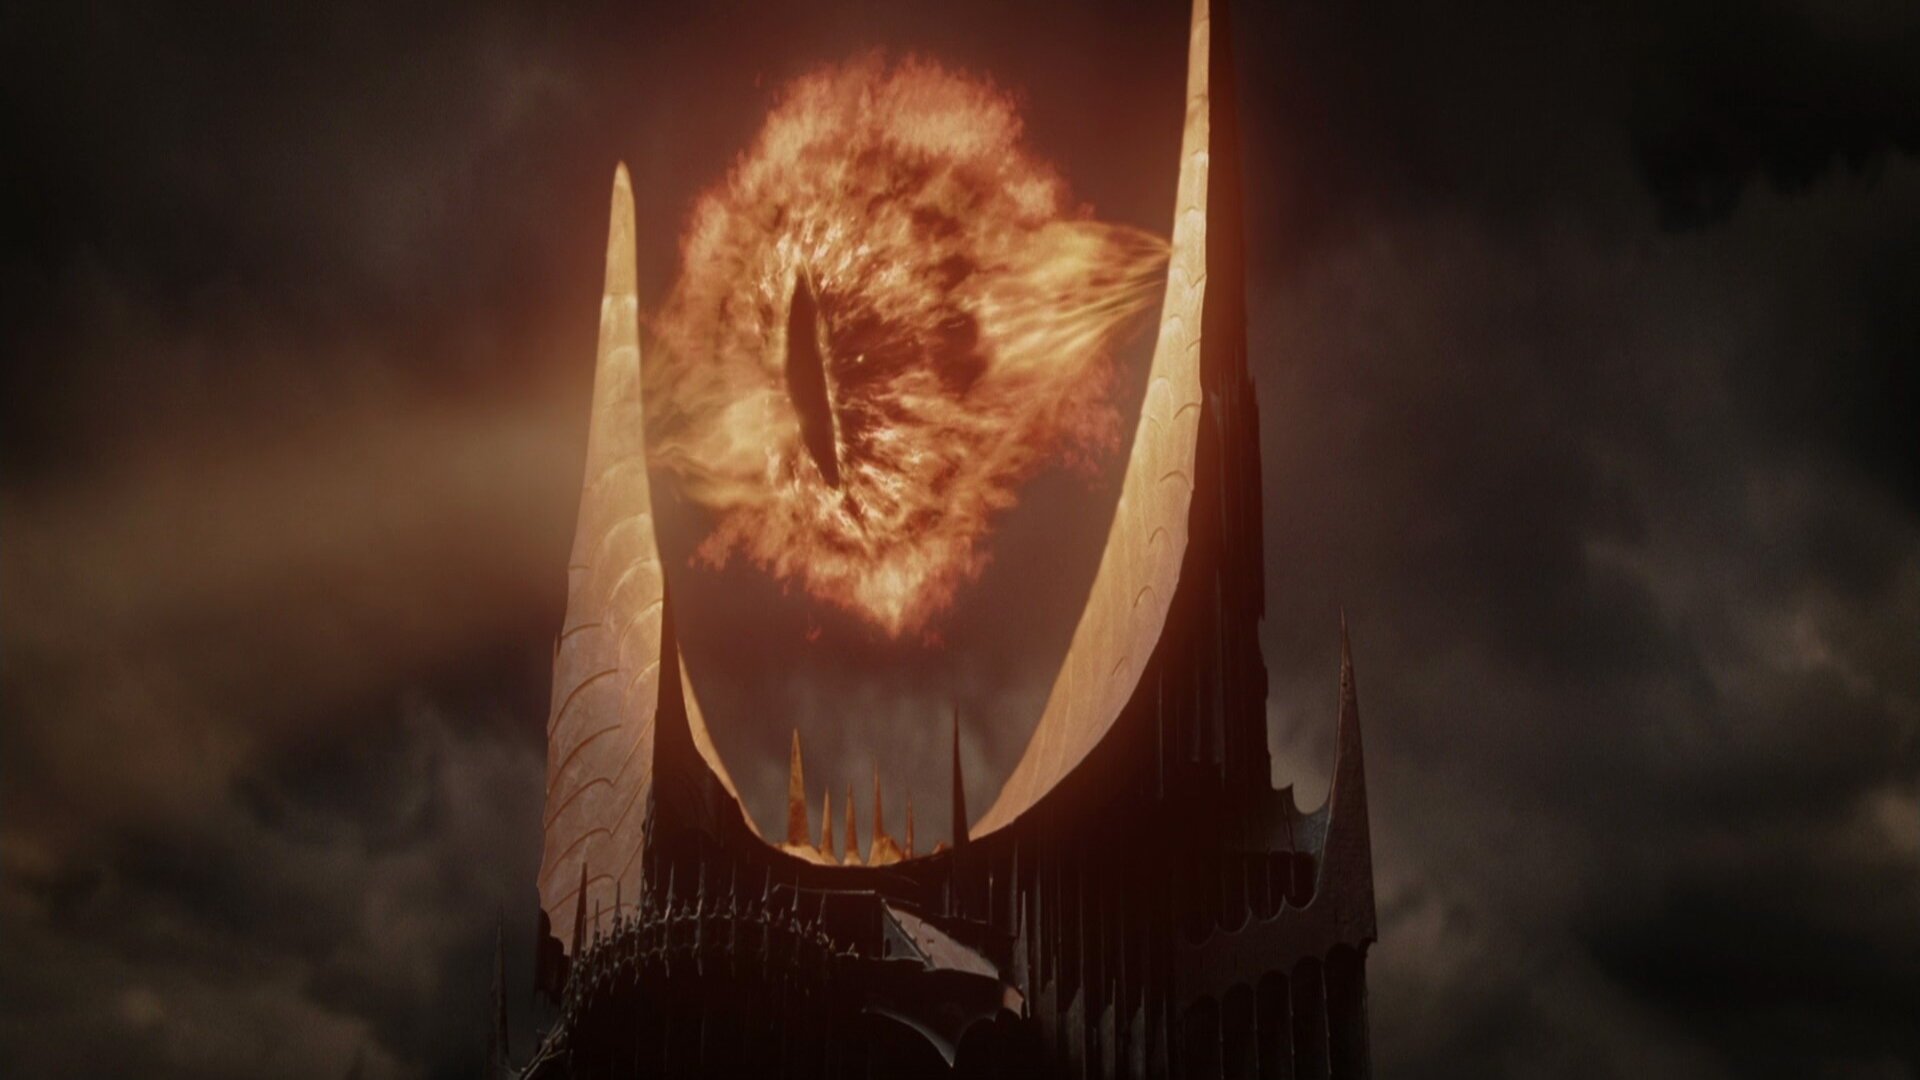 Властелин колец вырезанное. Властелин колец Саурон око. Мордор башня Саурона. Властелин колец башня Саурона. Глаз Саурона из Властелина колец.